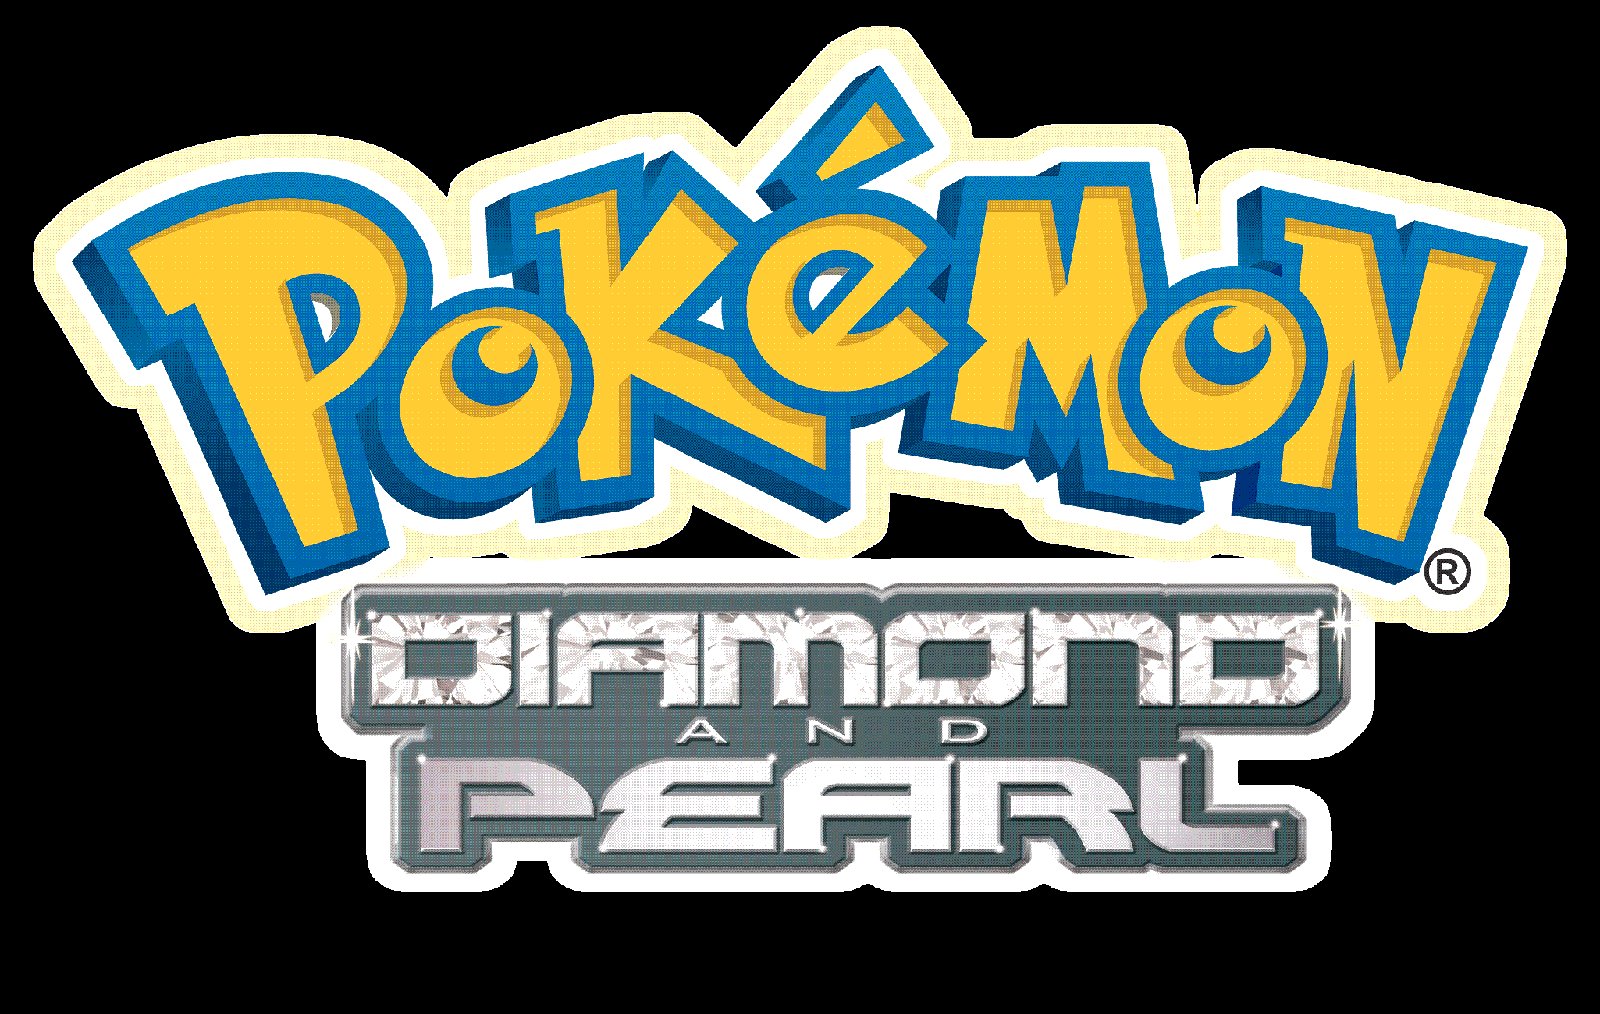 Pokemon Diamond Chart